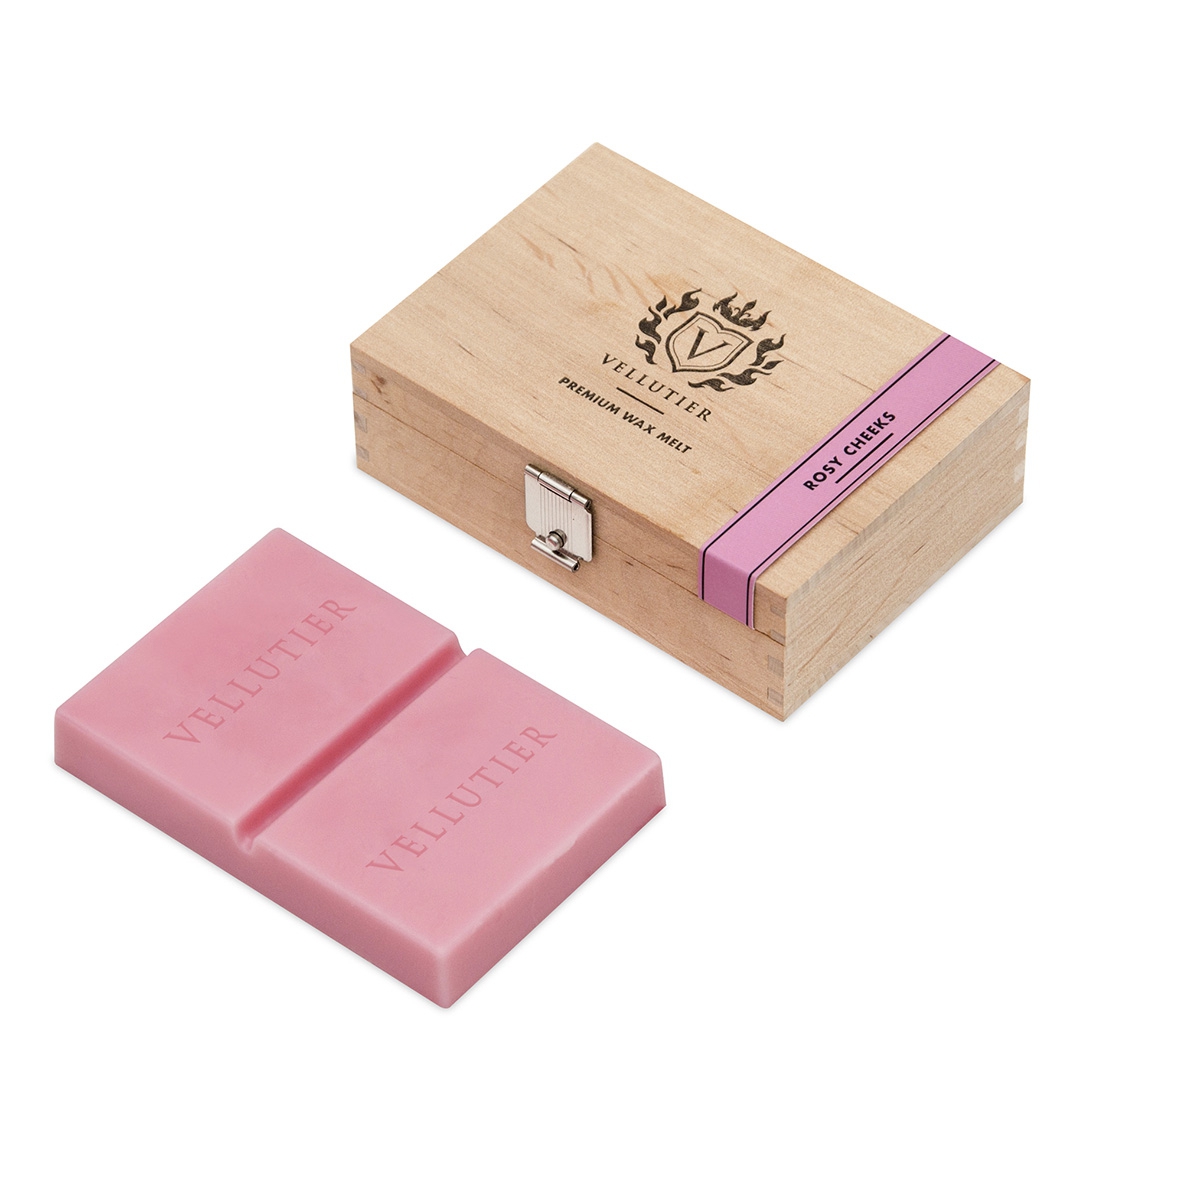 Rosy Cheeks Exklusiver Wax Melt 50g Holzbox